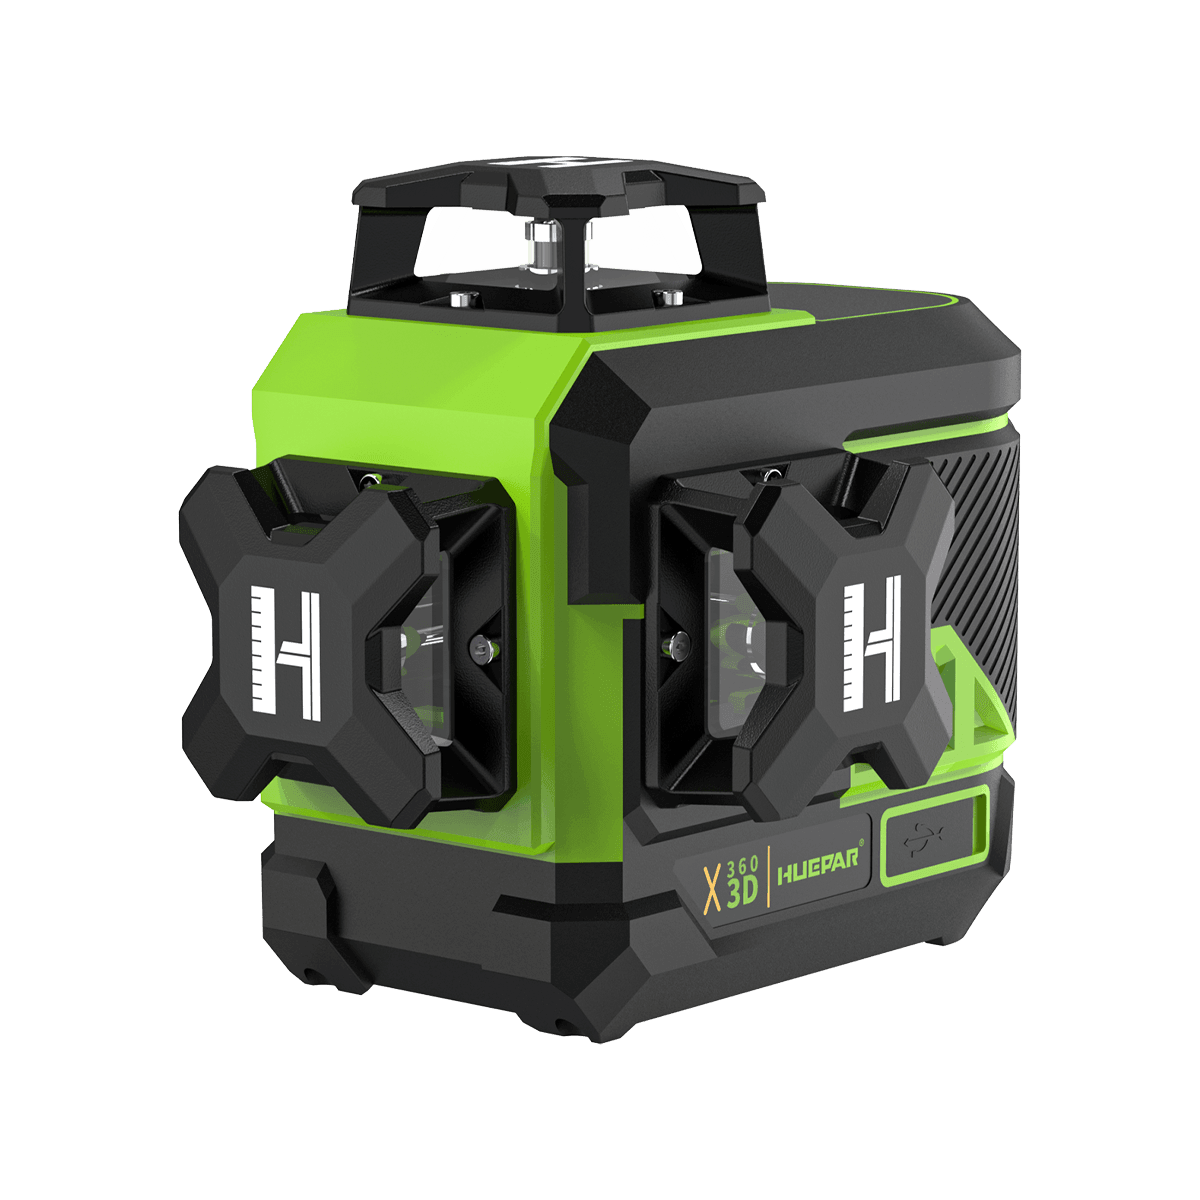 Huepar 603CG - 3D Green Beam Self-Leveling 3 X 360° Laser Level